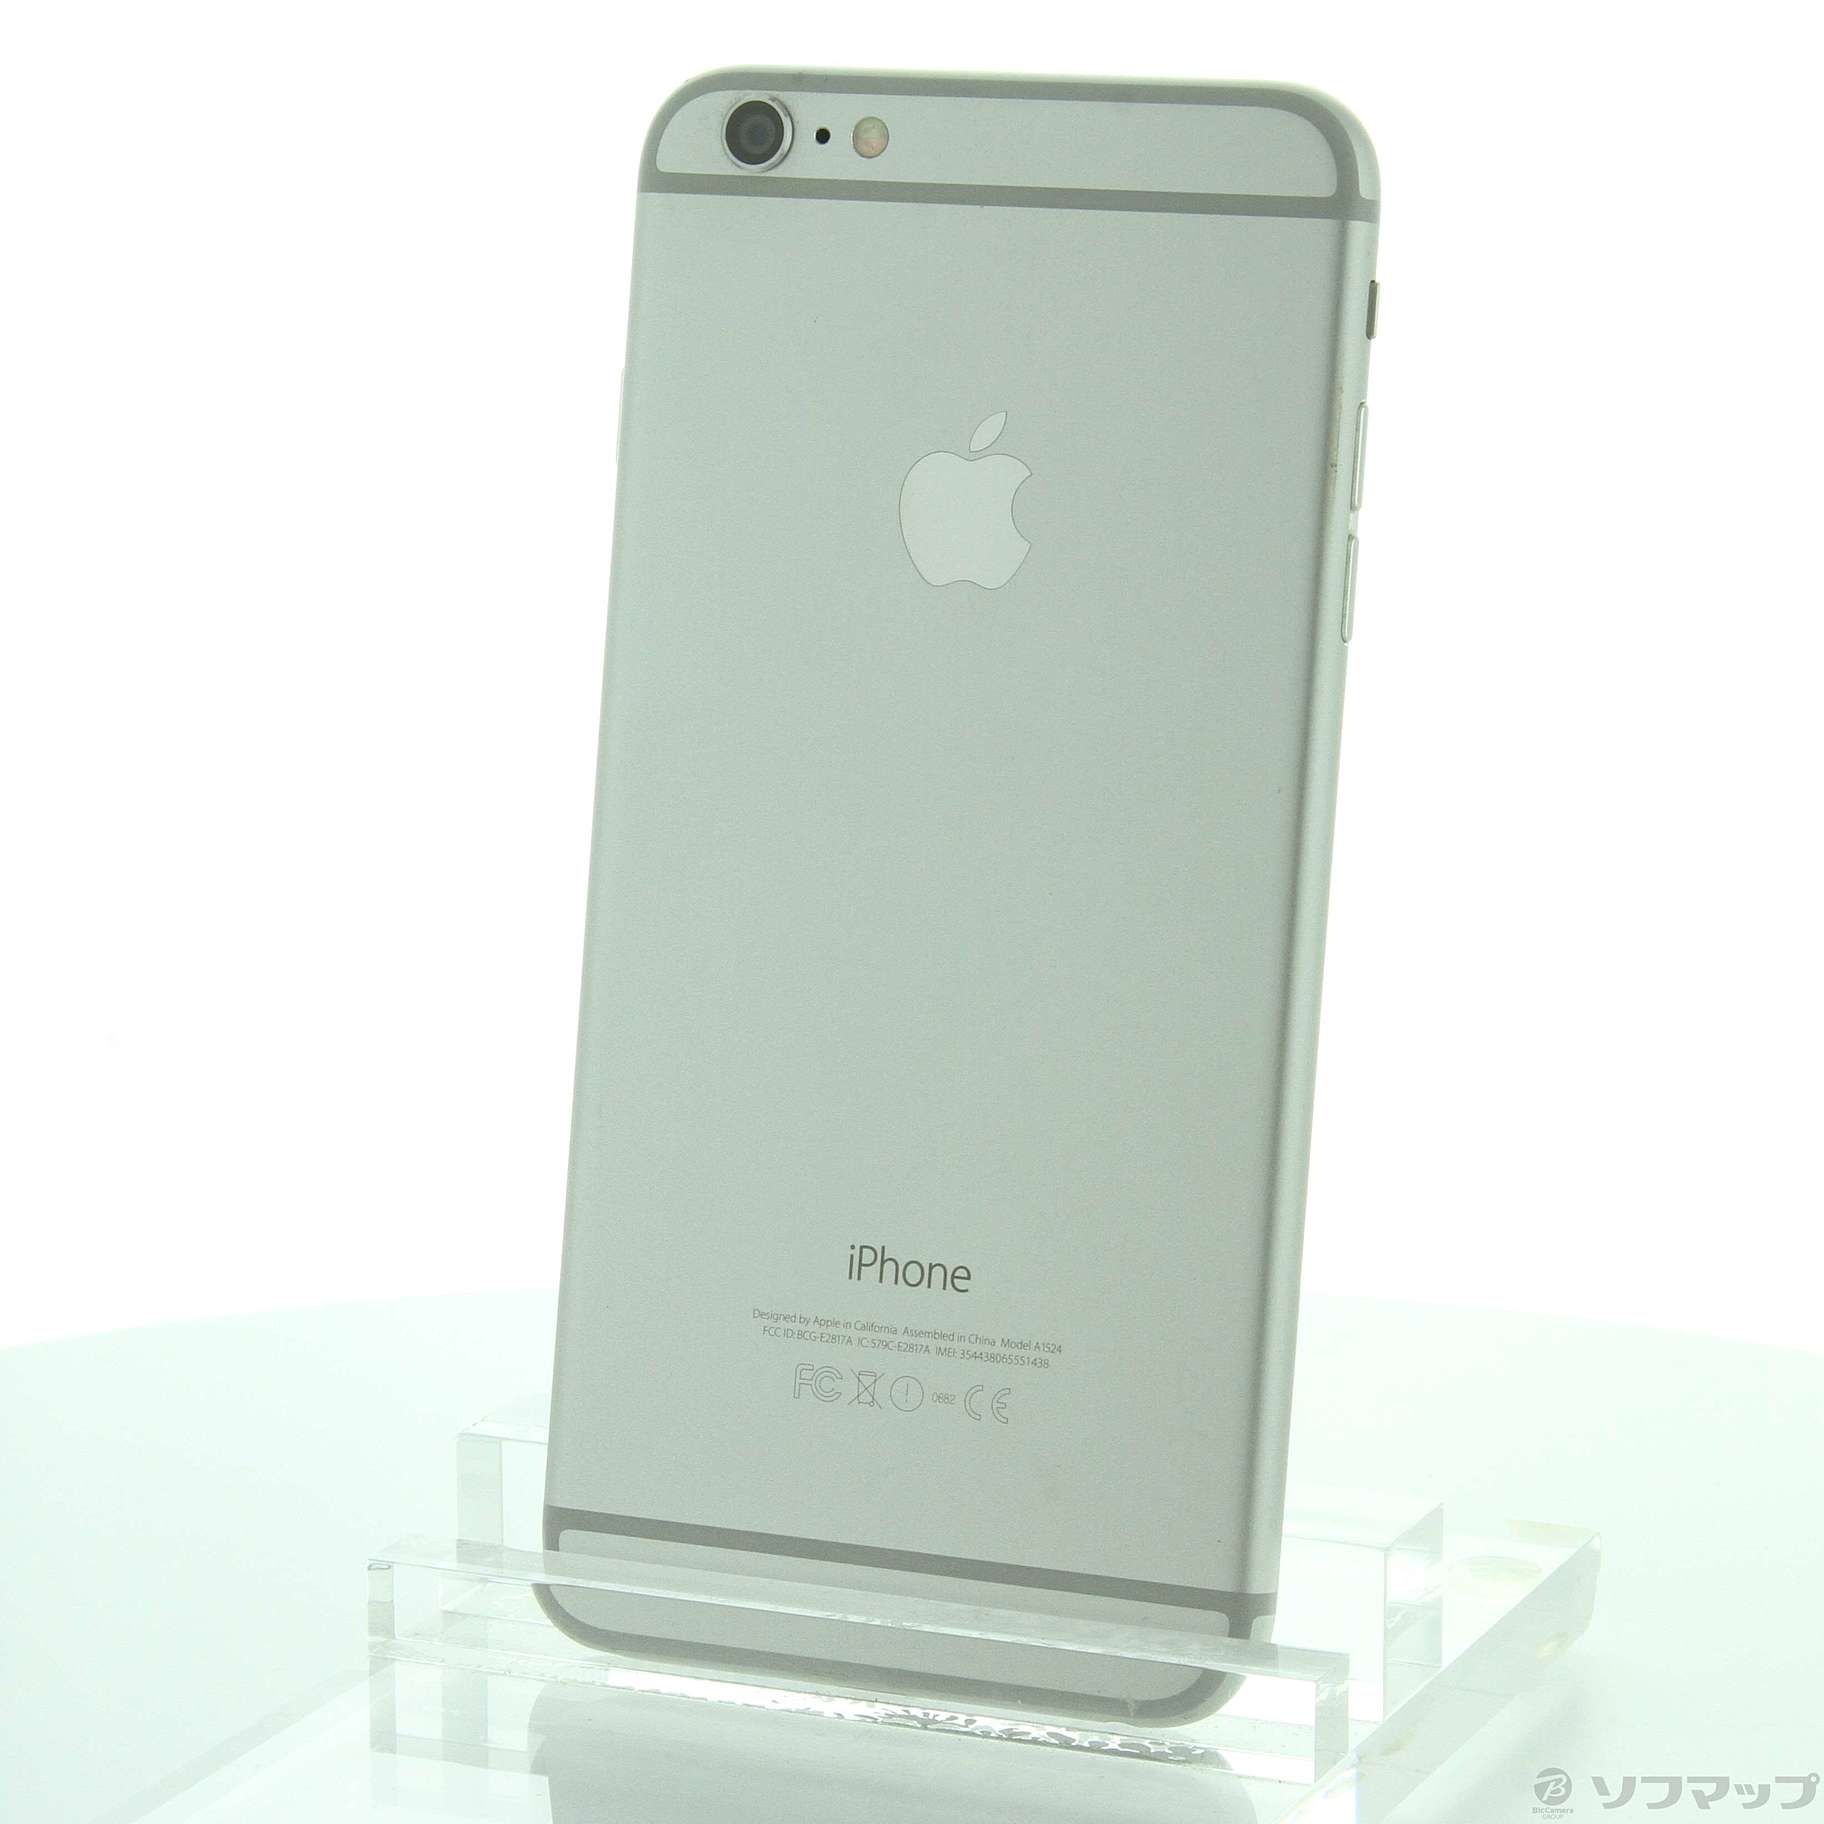 iPhone6 (64GB)docomo